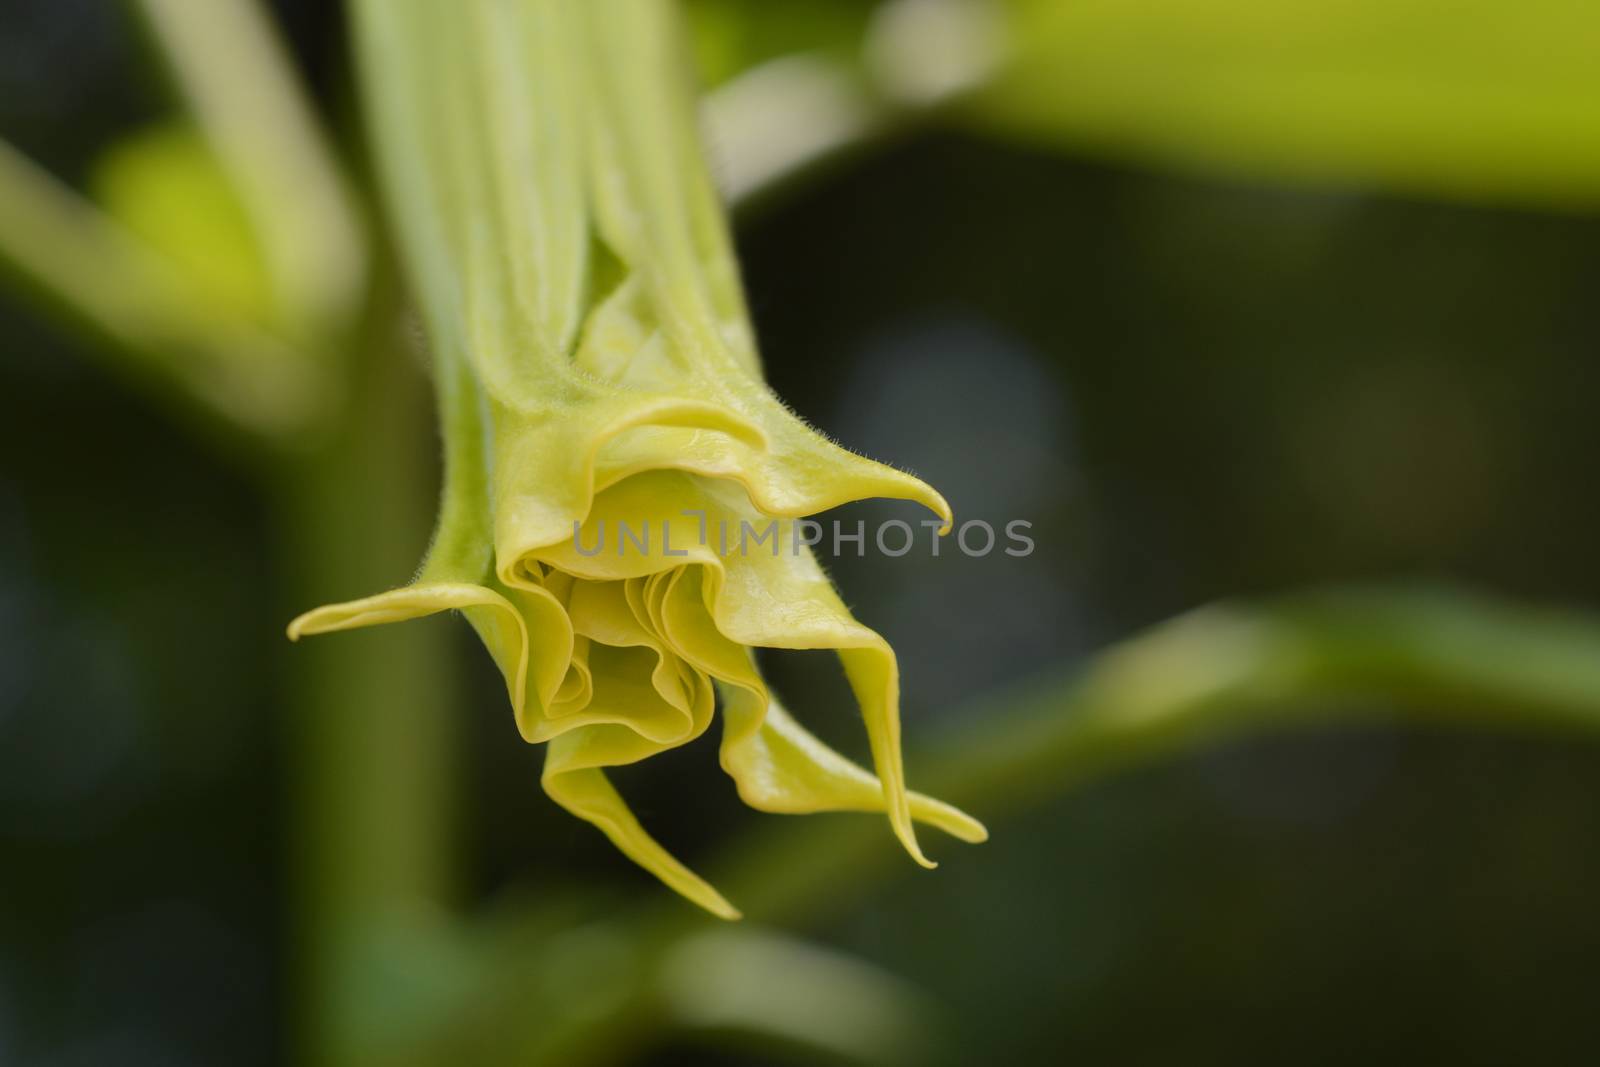 Angels trumpet flower bud close up - Latin name - Brugmansia suaveolens